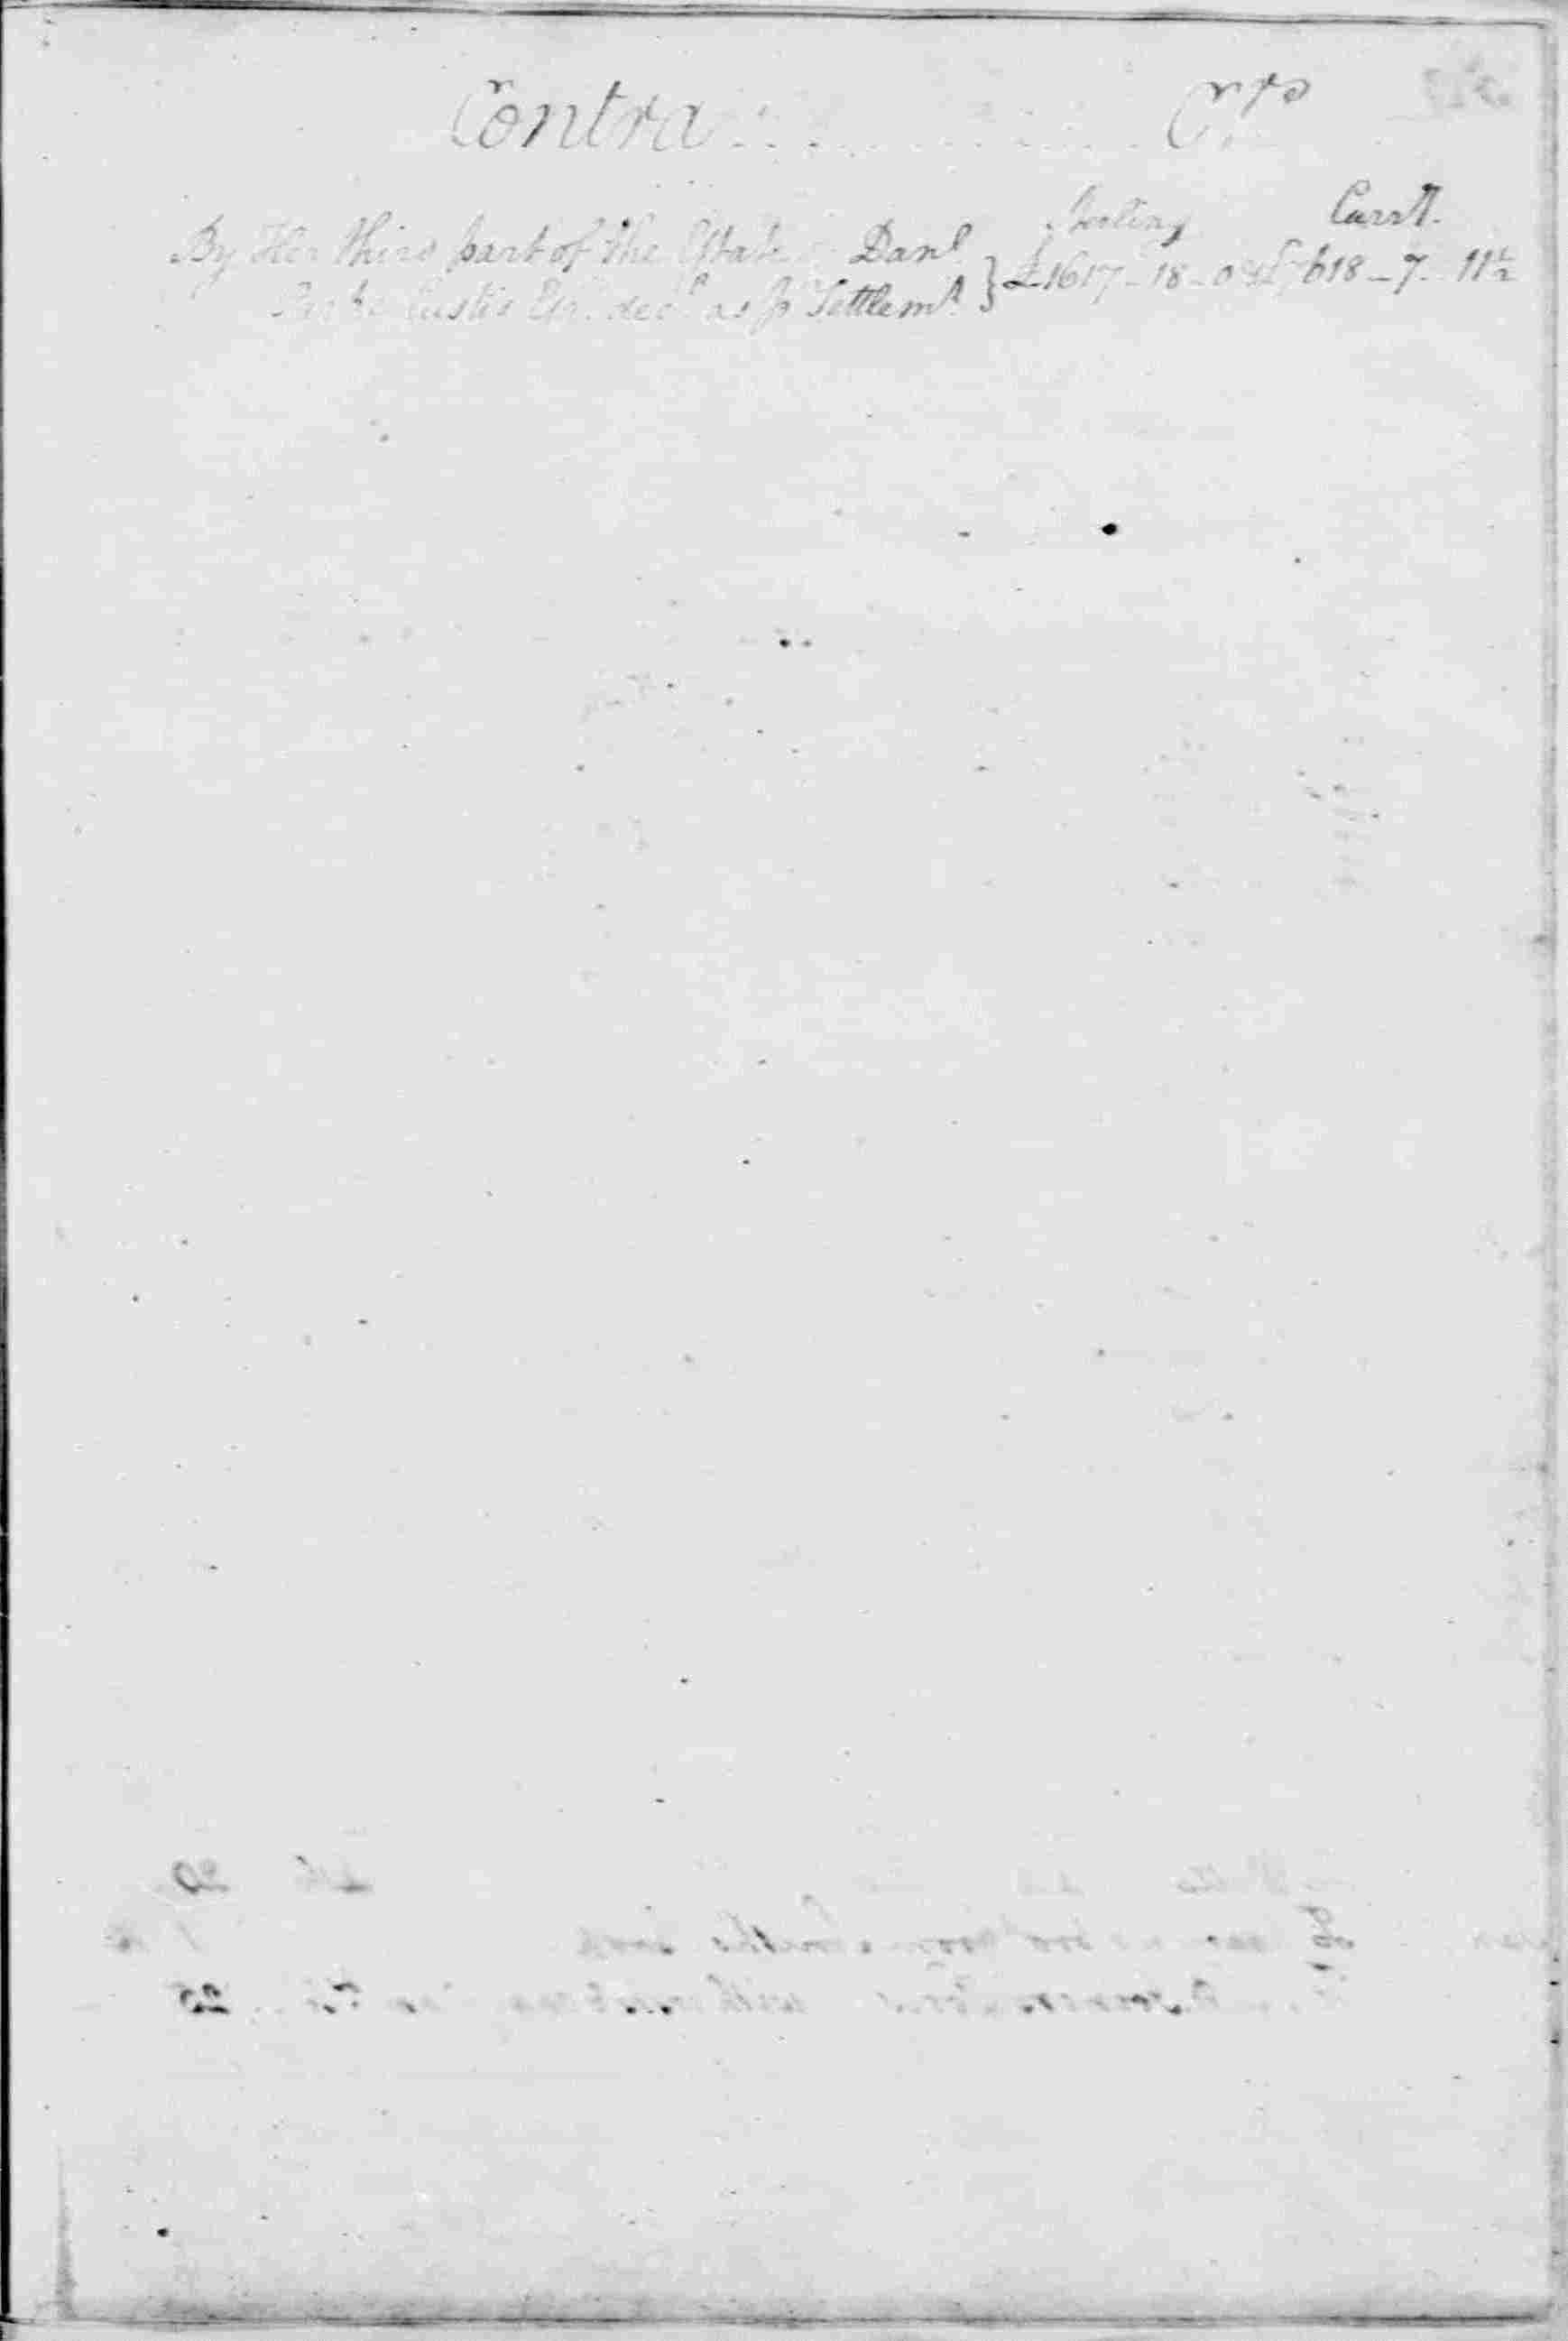 Ledger A, folio 59, right side